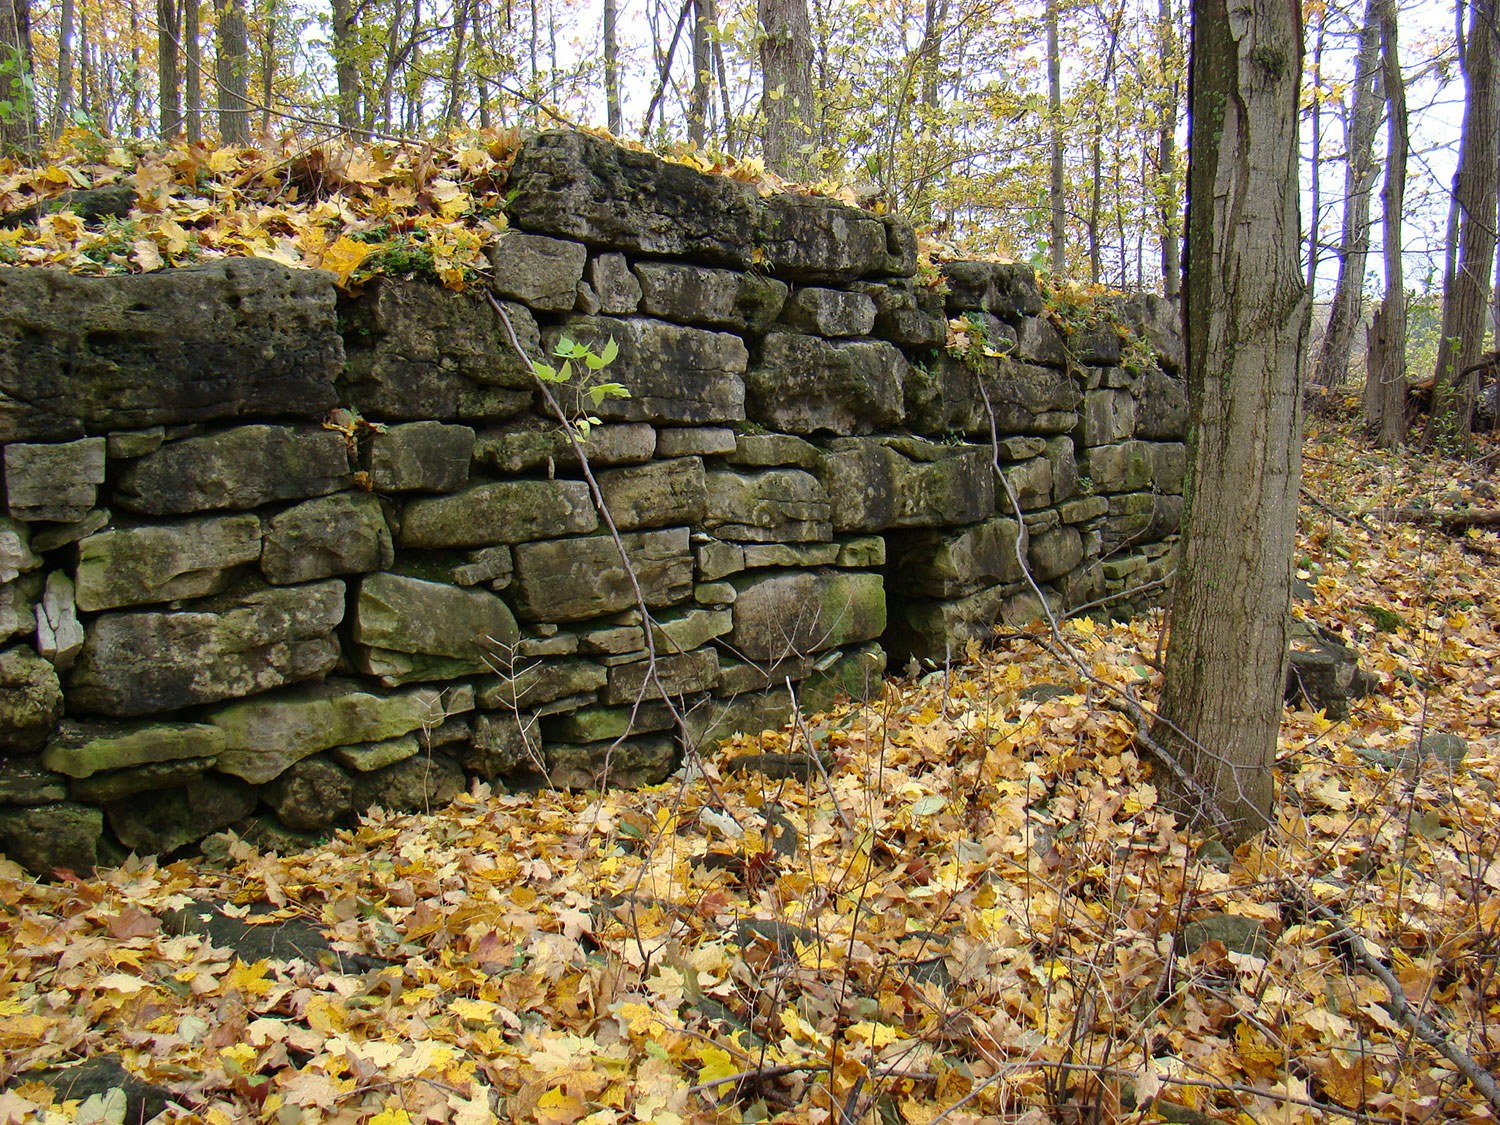 Masonry ruins of a 19th-century lime kiln